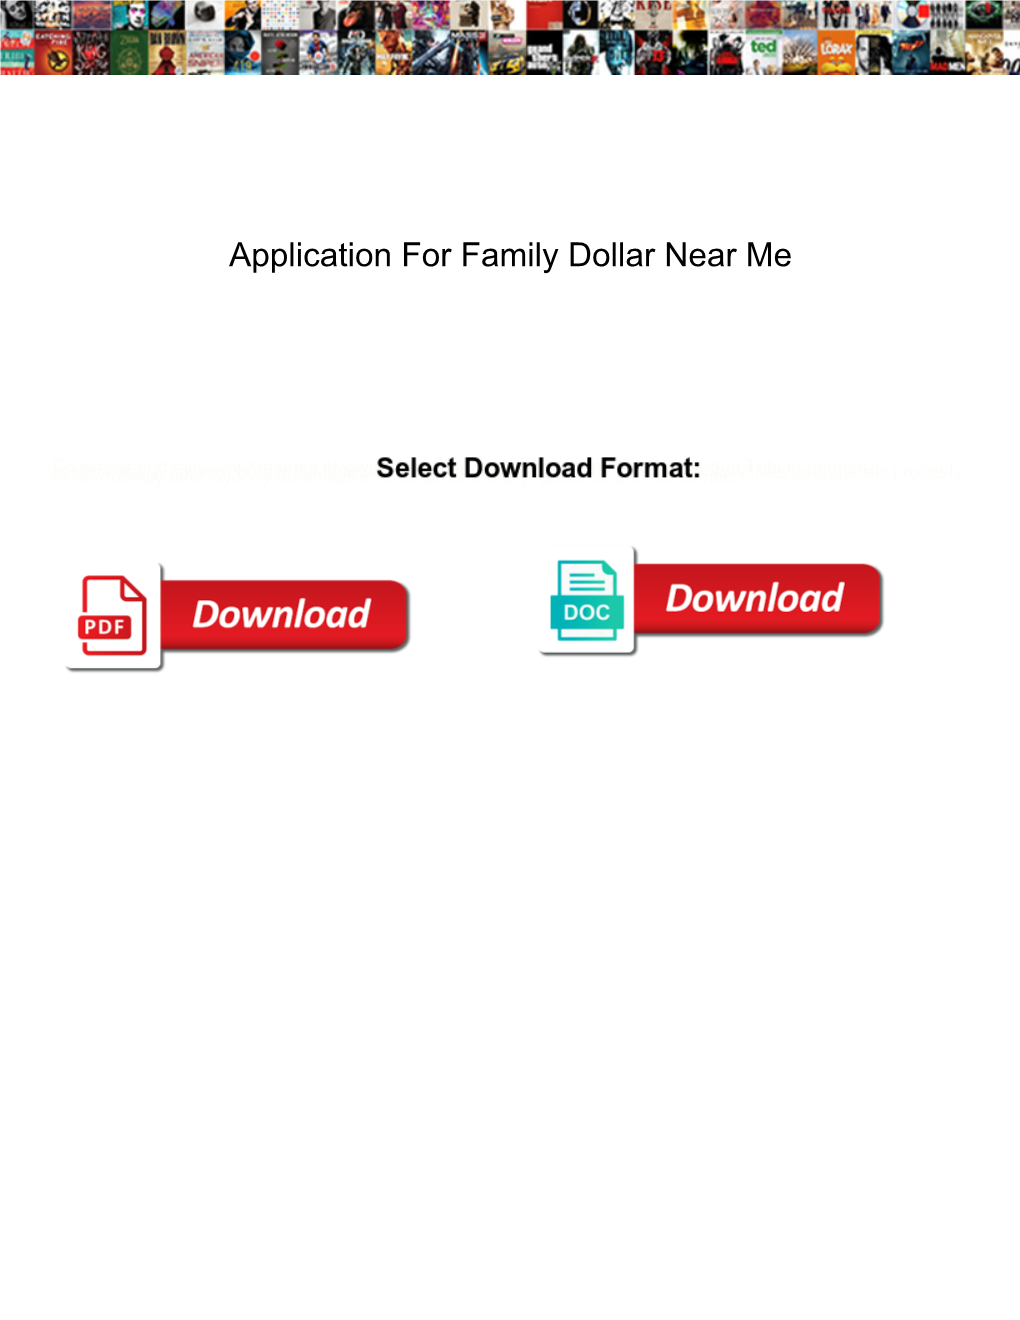 Application for Family Dollar Near Me